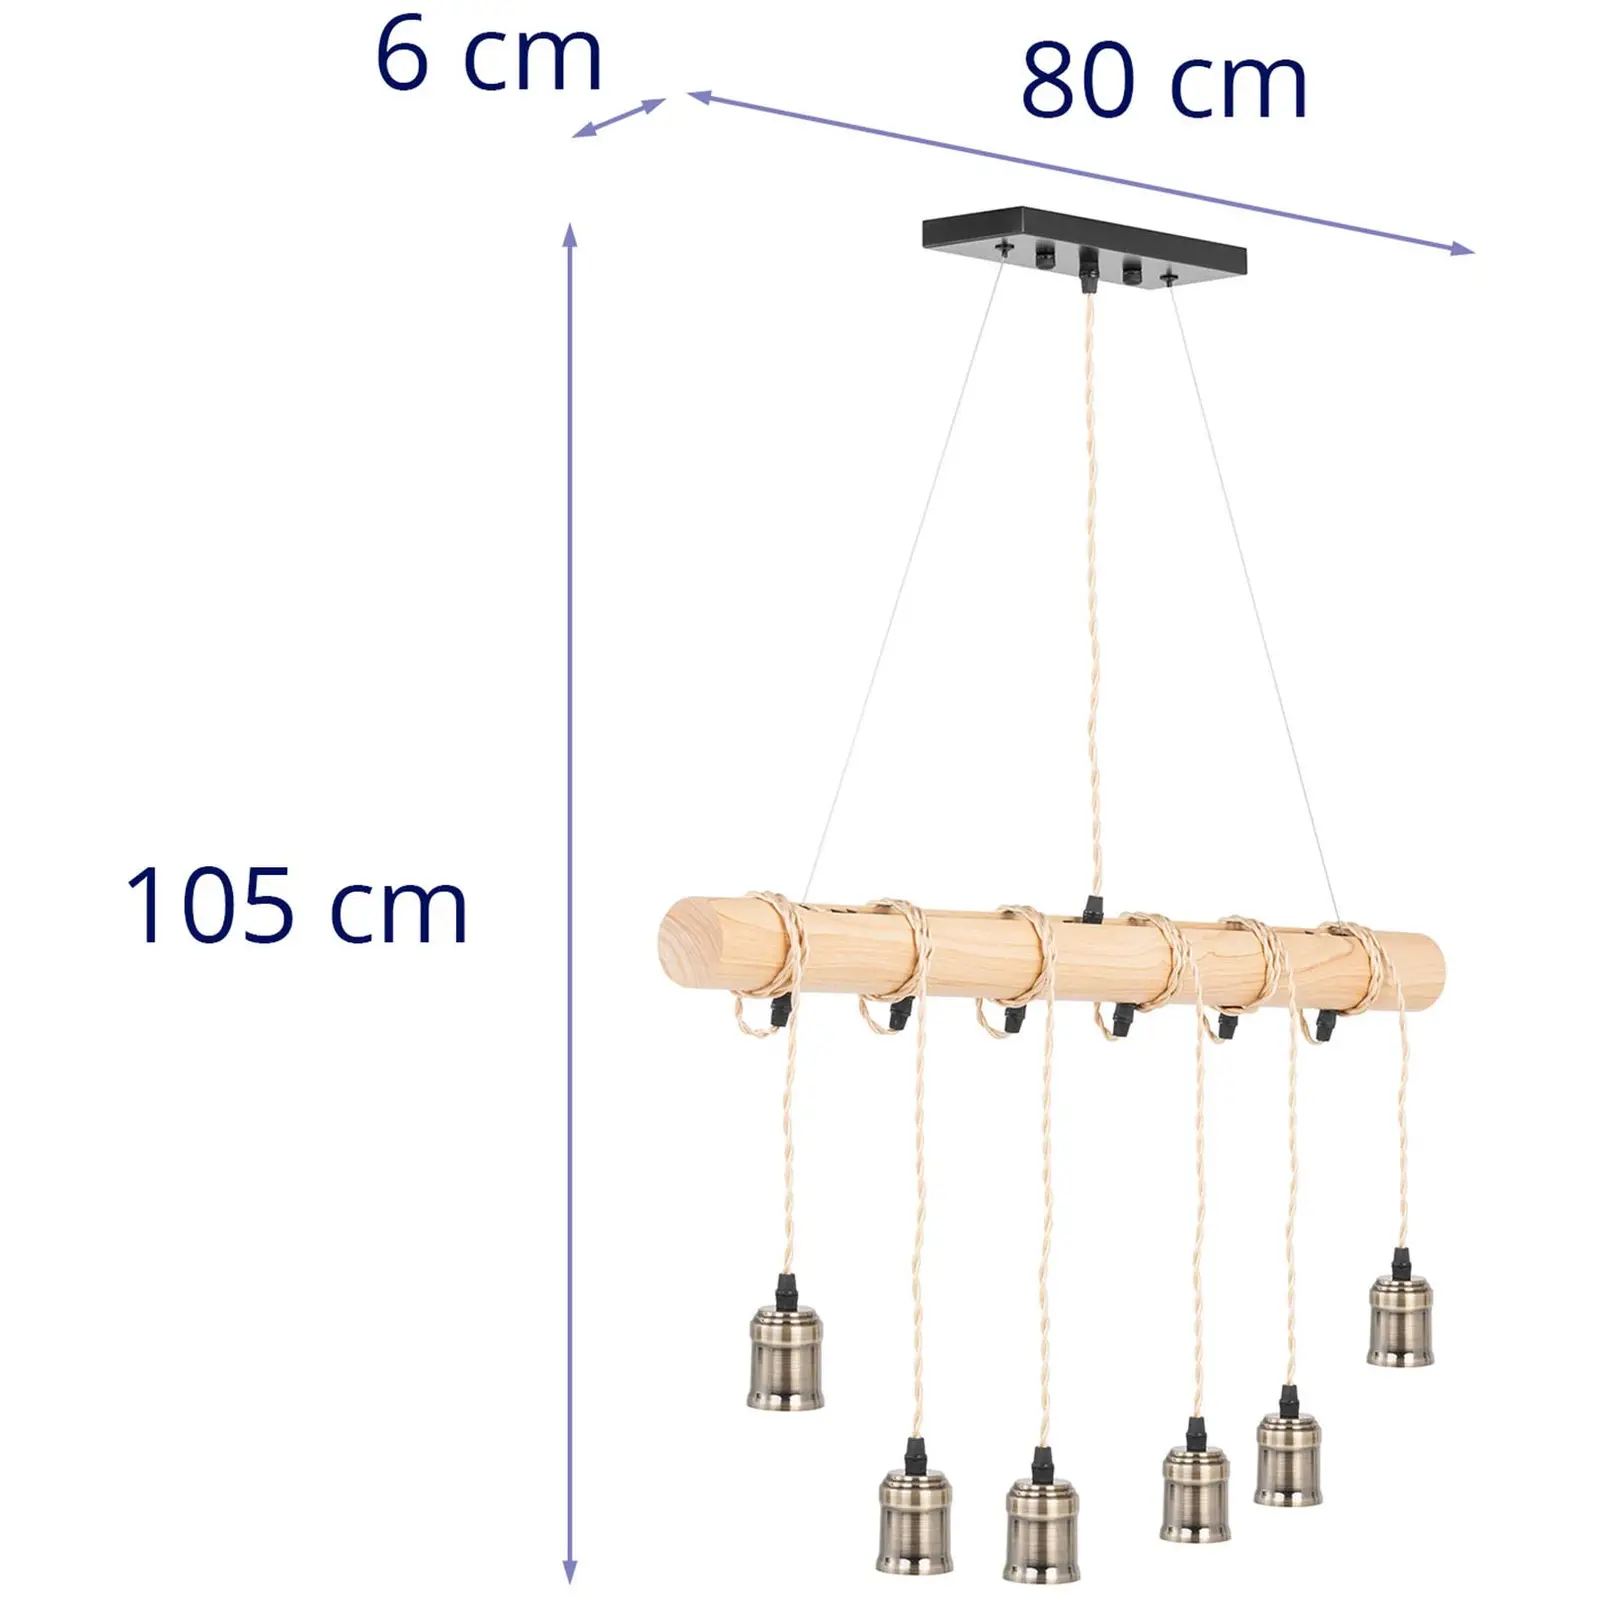 Pendant Light - 6 light sources - wooden beam